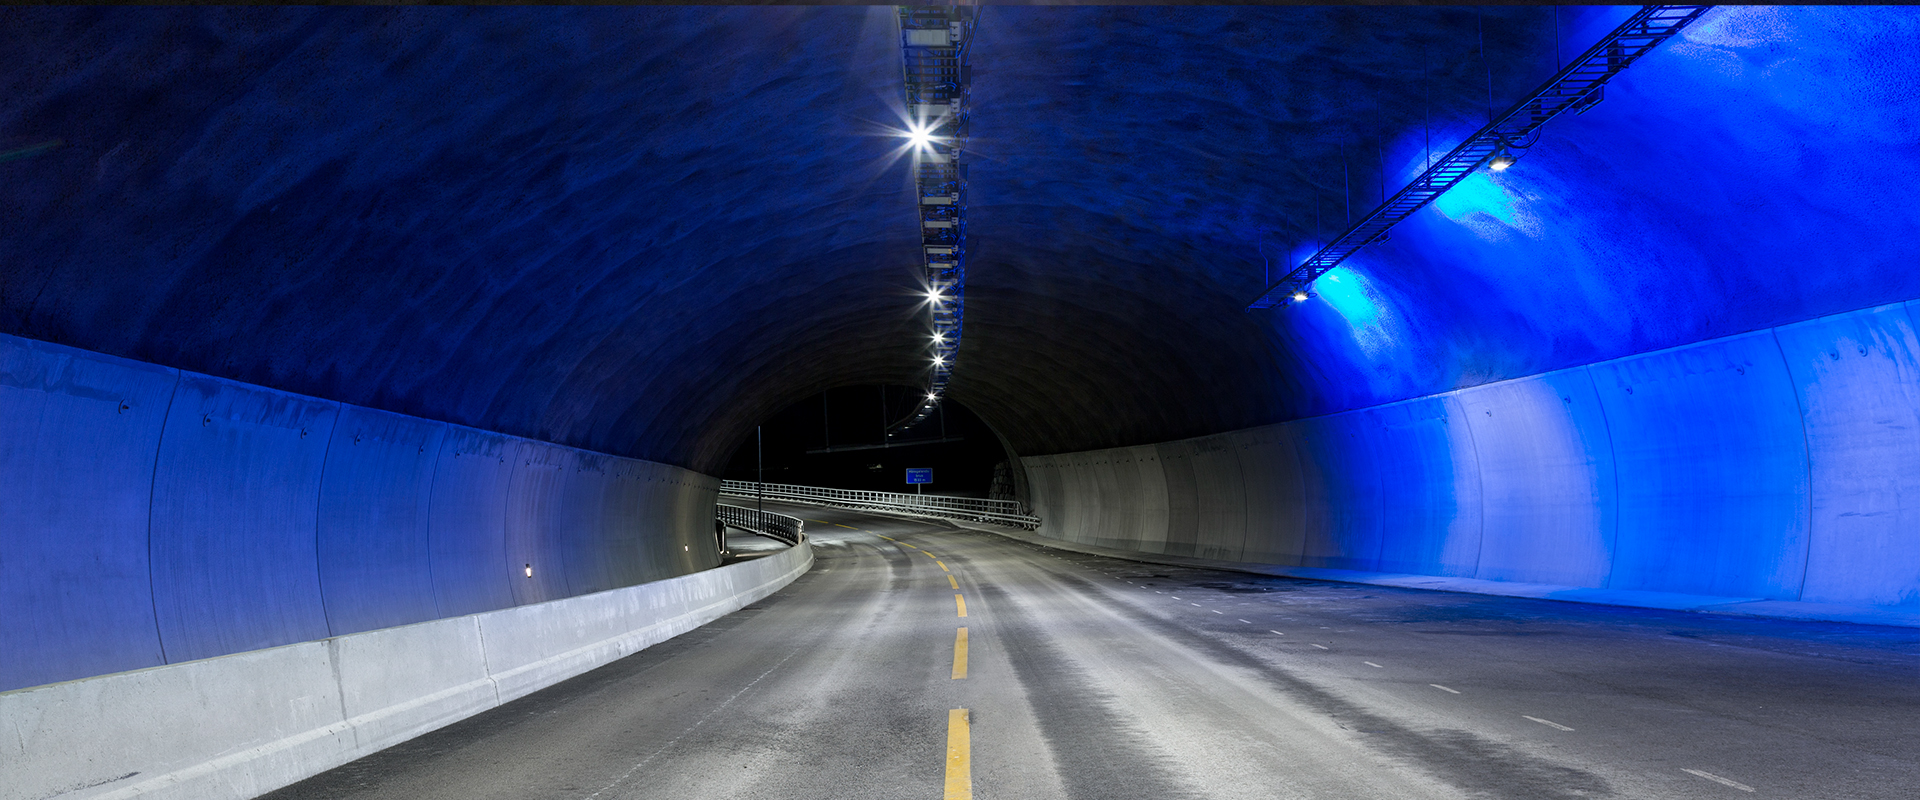 tunnels routiers à LED